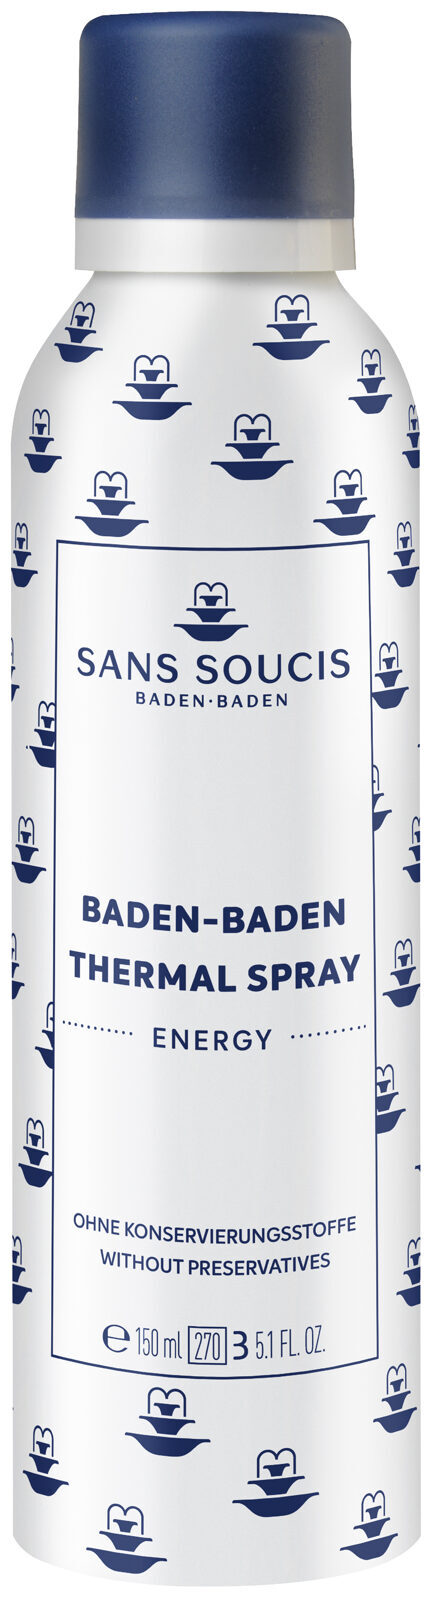 BADEN-BADEN • THERMAL SPRAY • 150ML